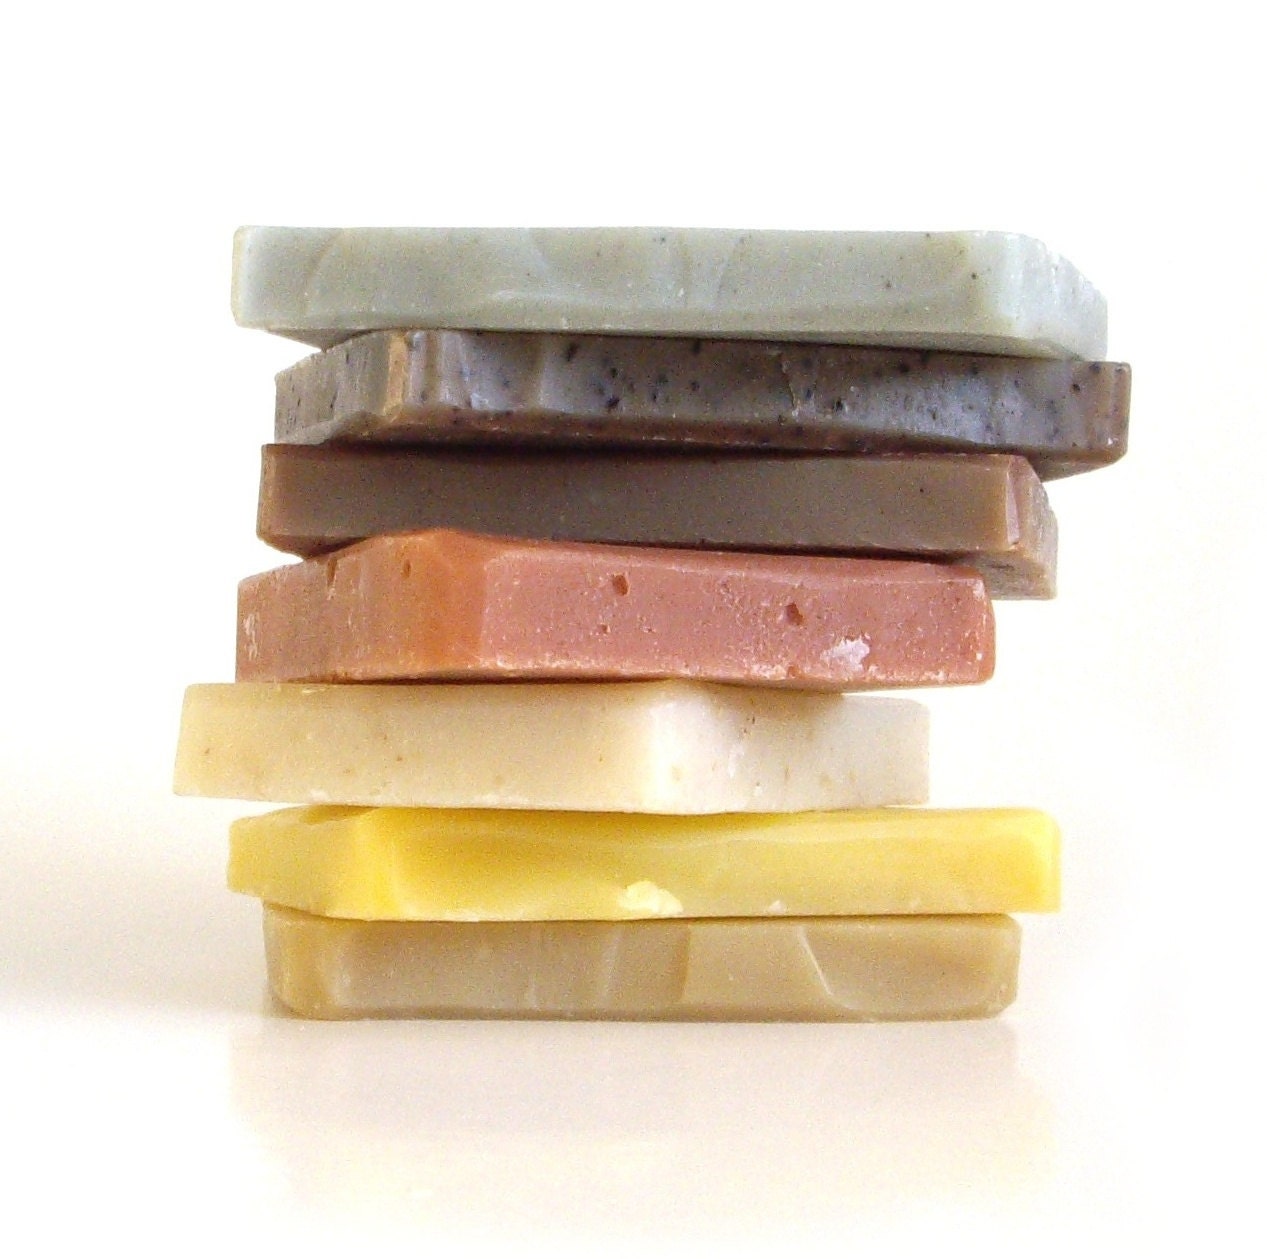 Soap Sampler - Vegan Soap - All natural Soap - RightSoap